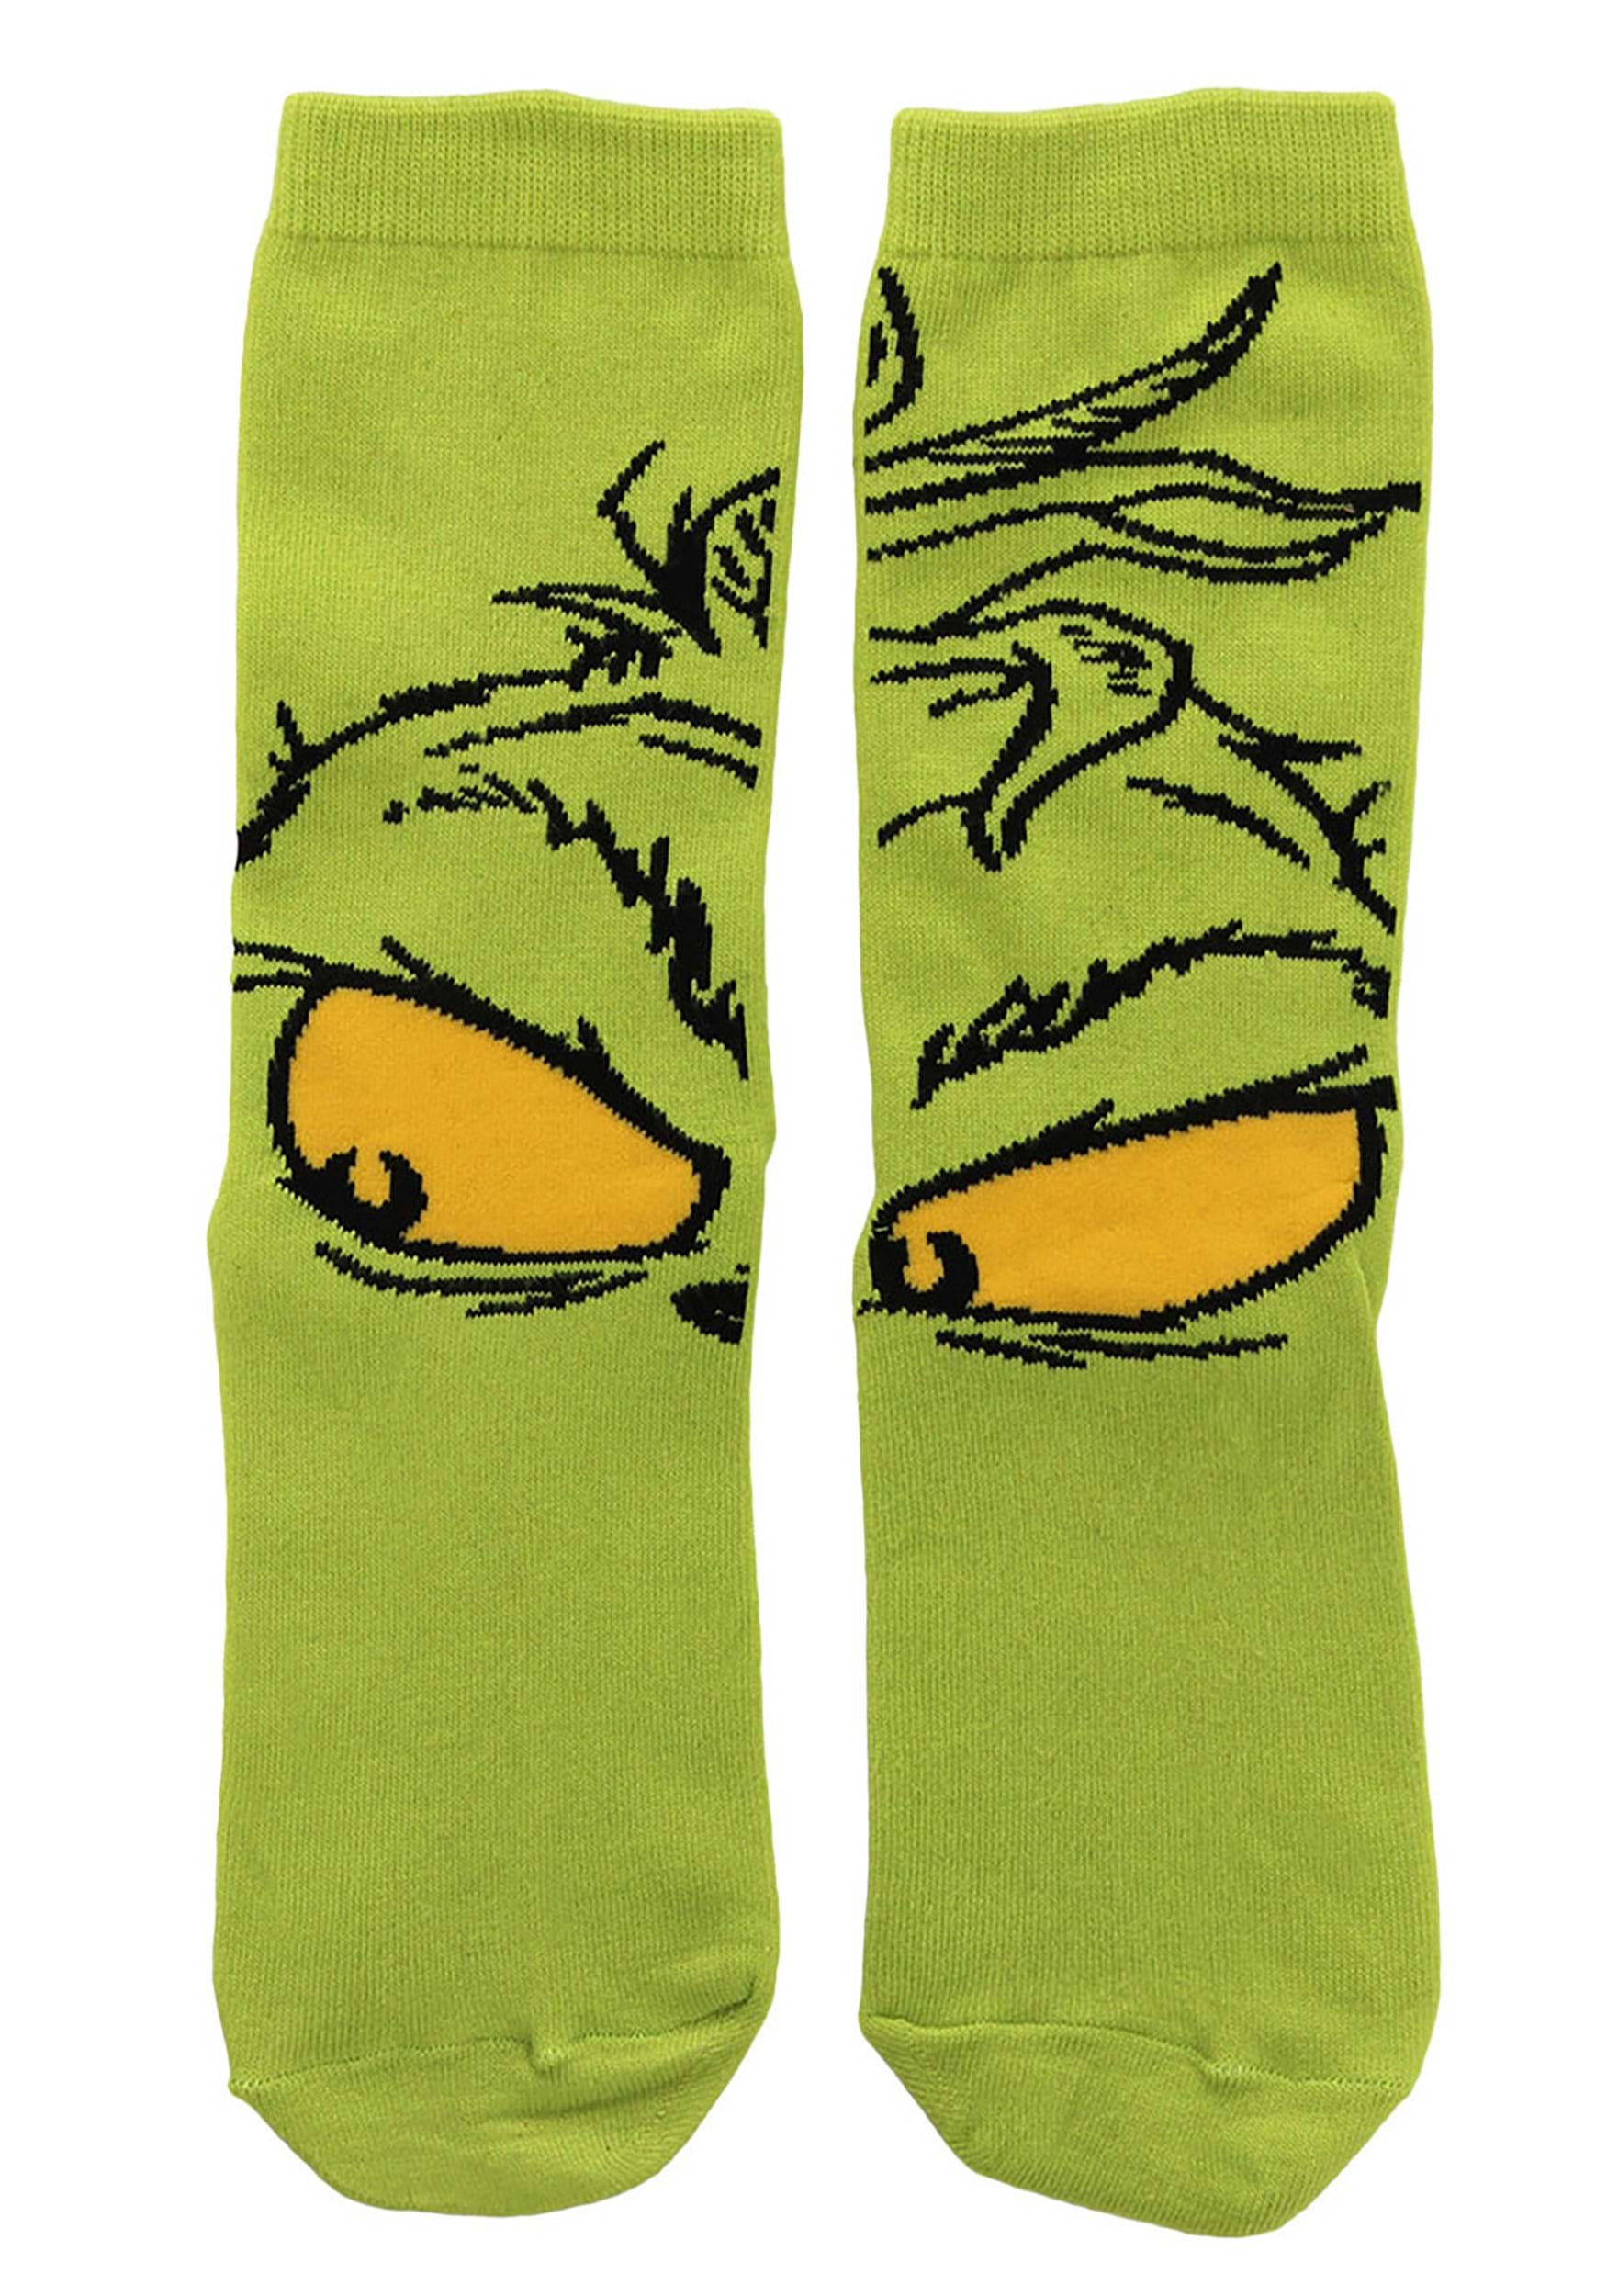 1X Pair Green Dr Seuss The Grinch Themed Designer Unisex Crew Socks LIMITED ED 